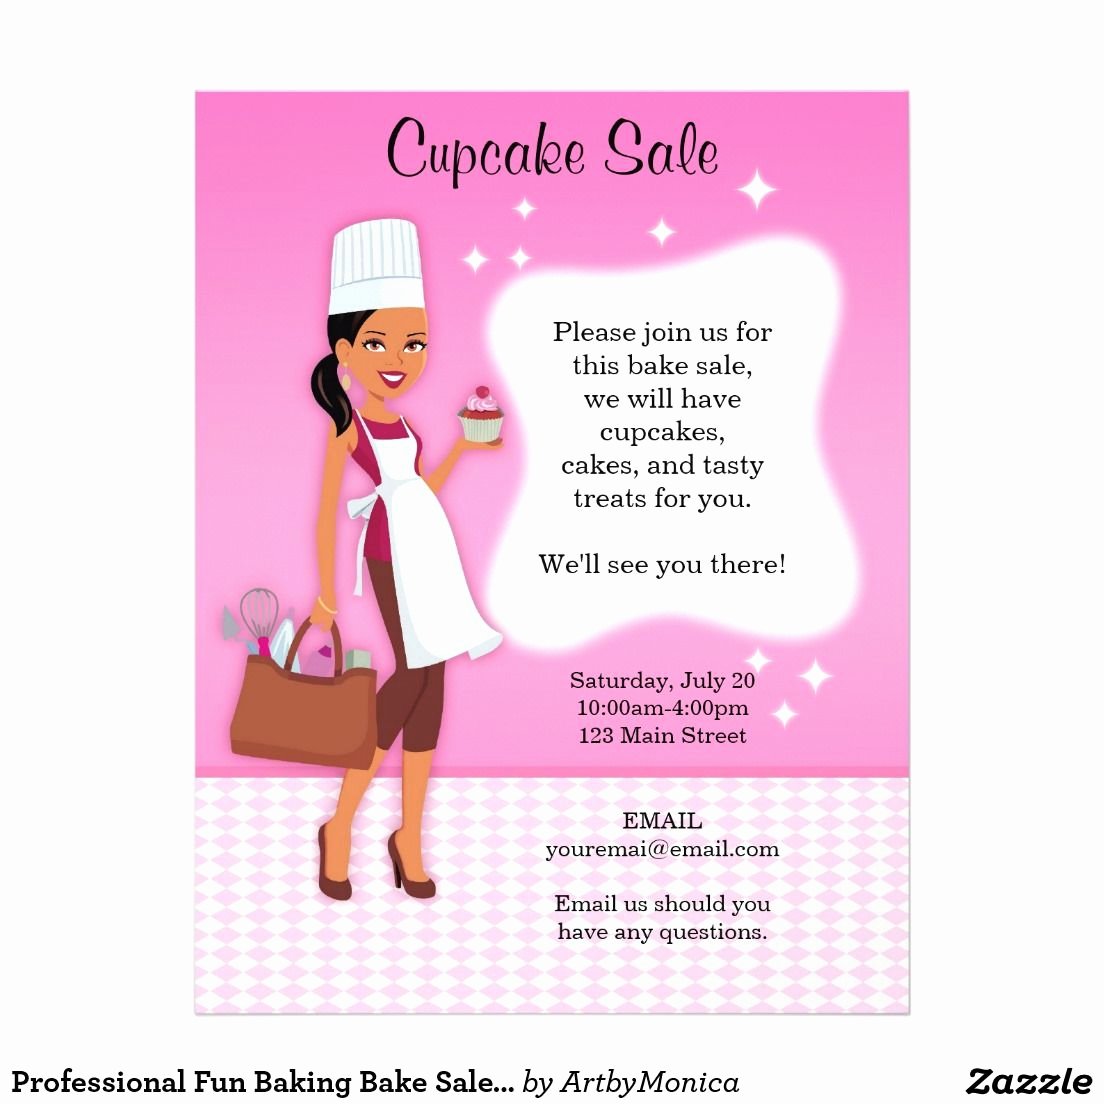 Bake Sale Fundraiser Flyer Template Elegant Professional Fun Baking Bake Sale Custom Flyers Zazzle Brianna S Bake Goods